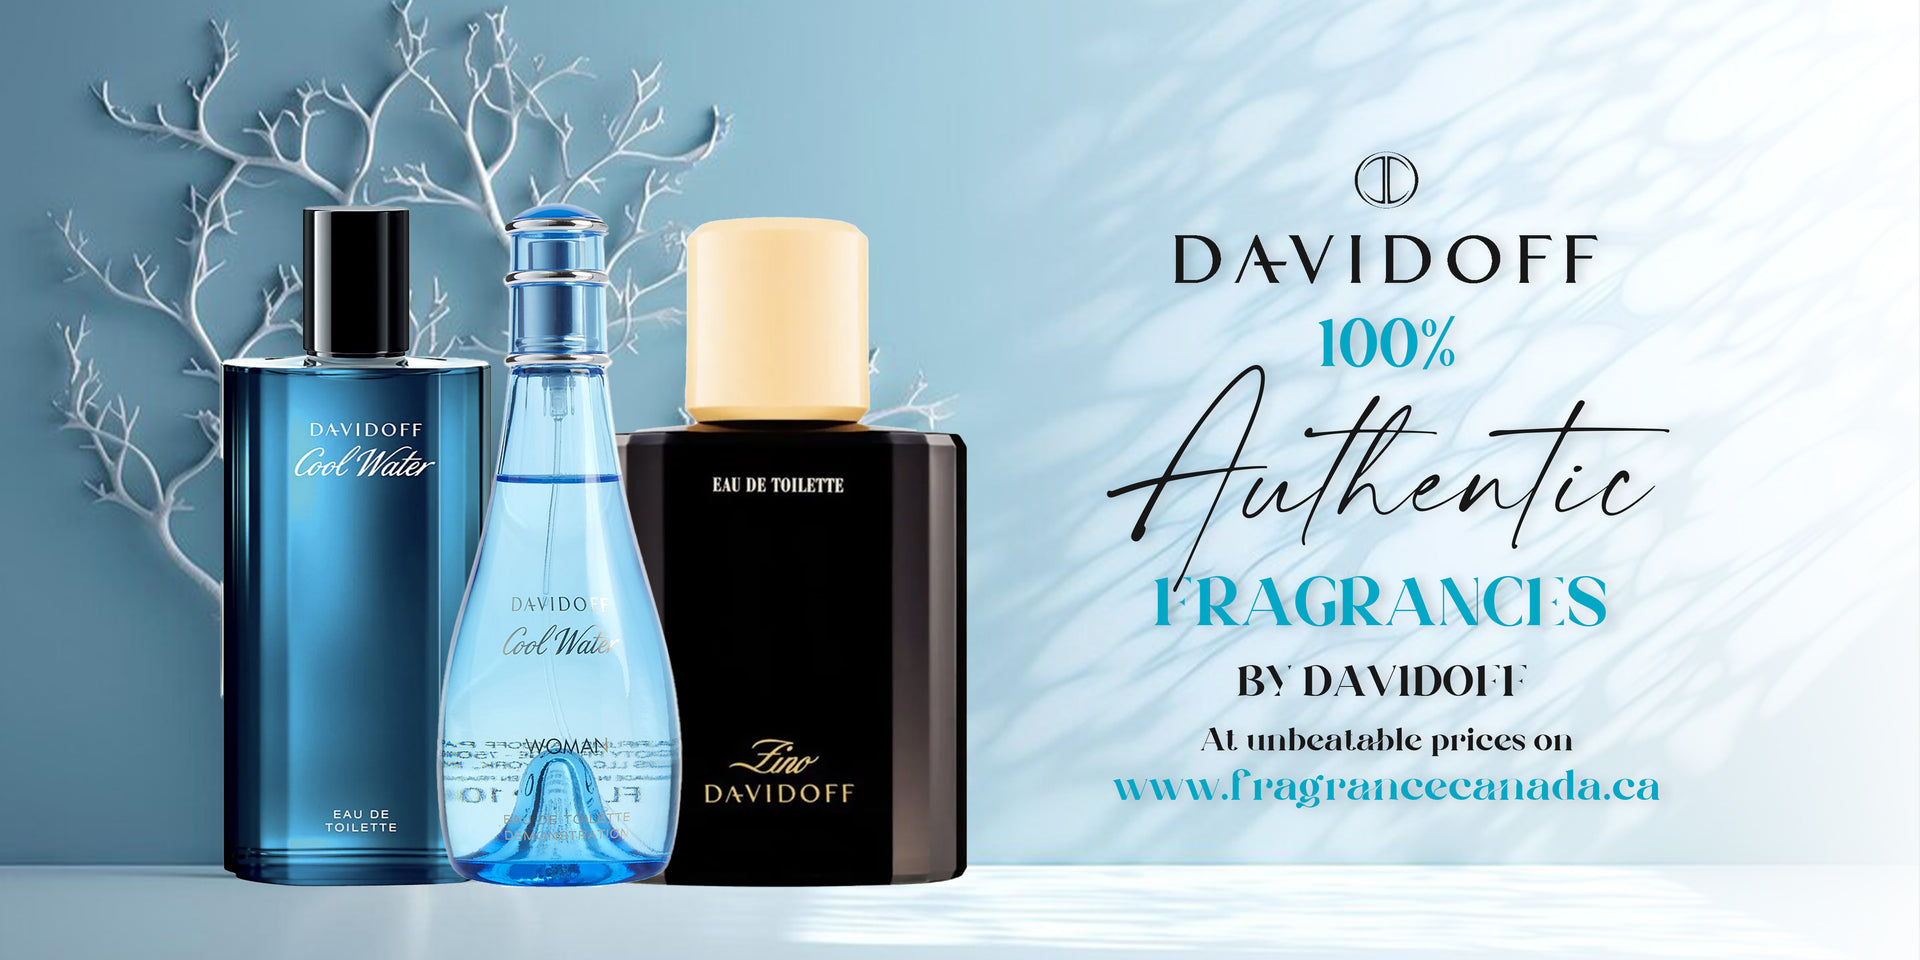 Davidoff Perfumes & Colognes for Men & Women